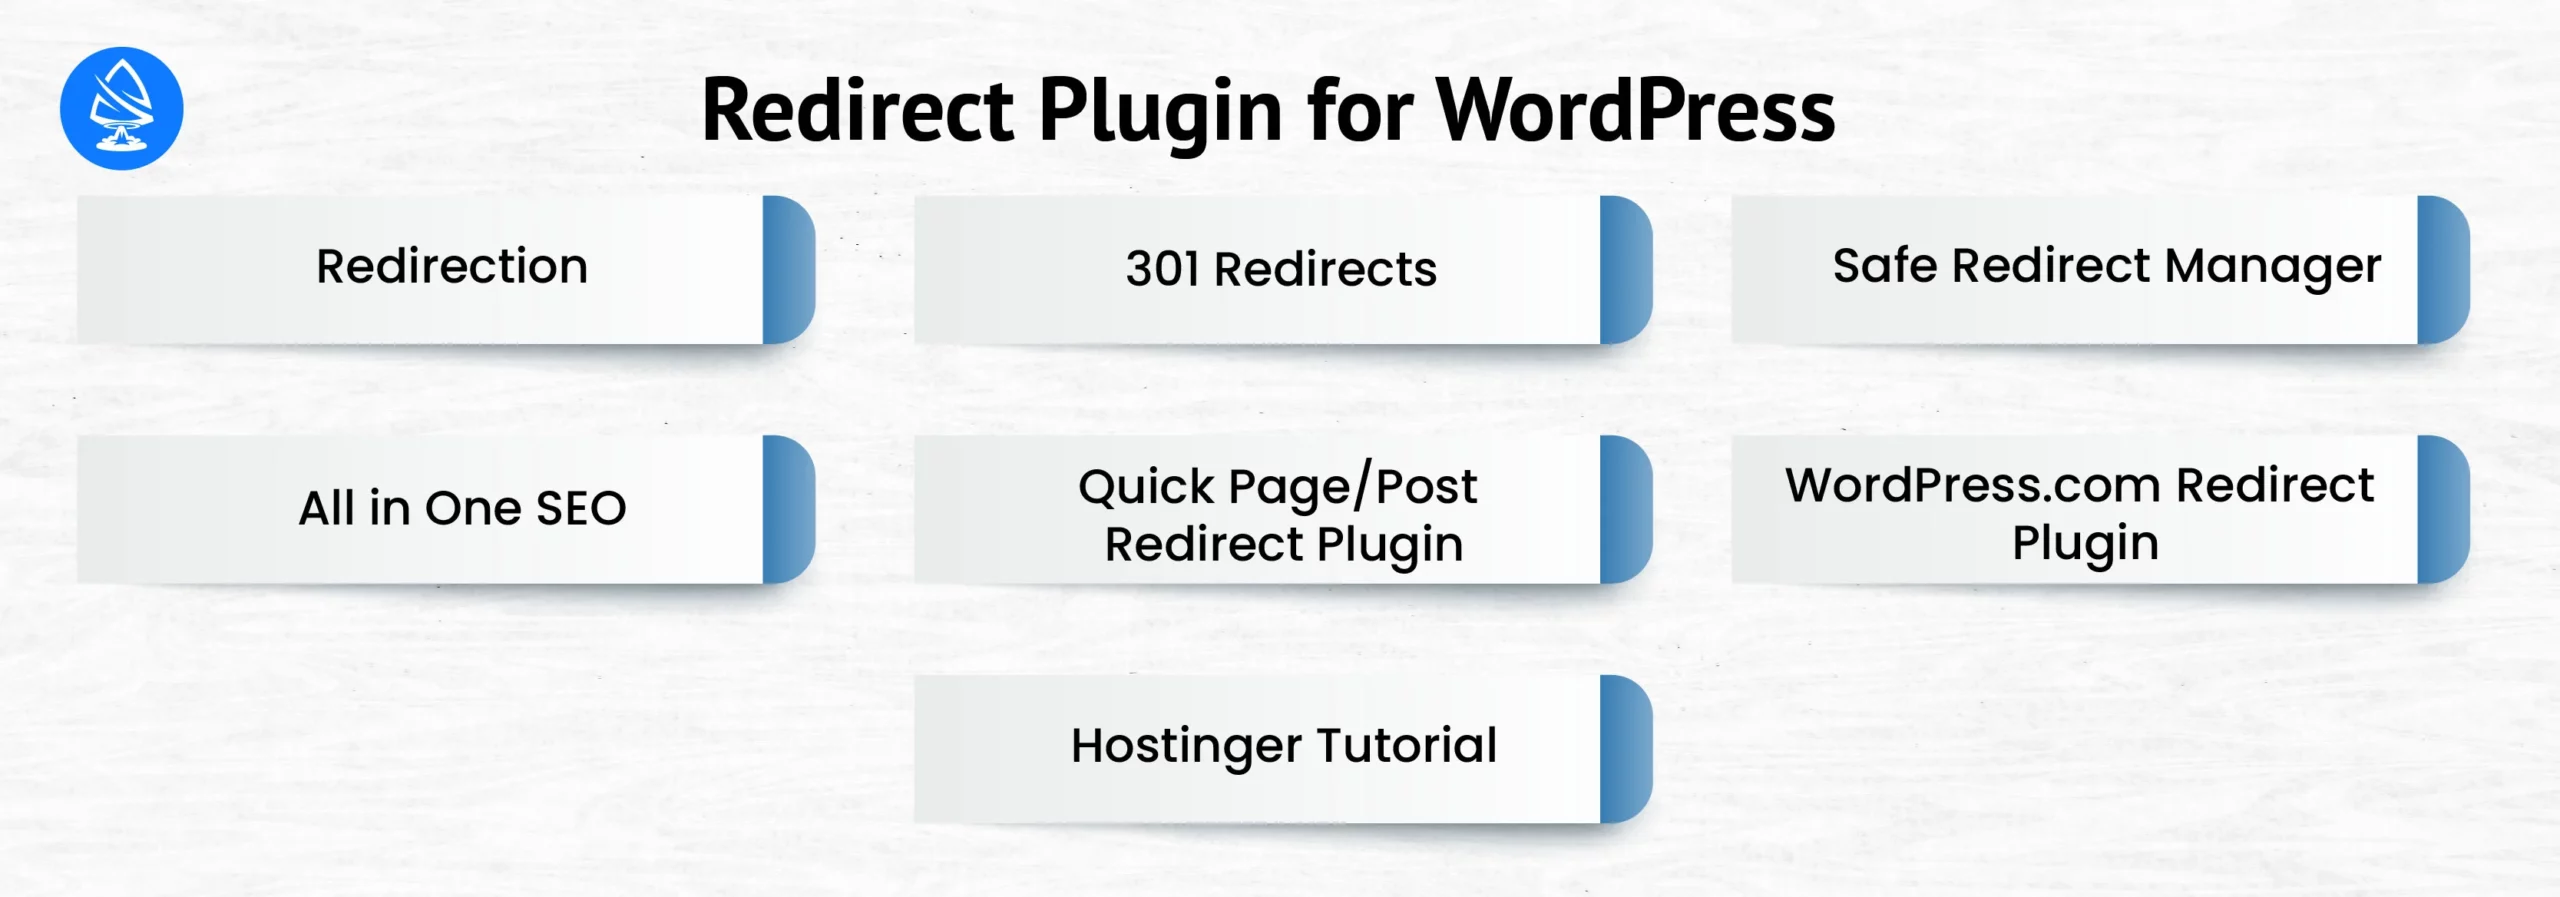 Redirect Plugin for WordPress